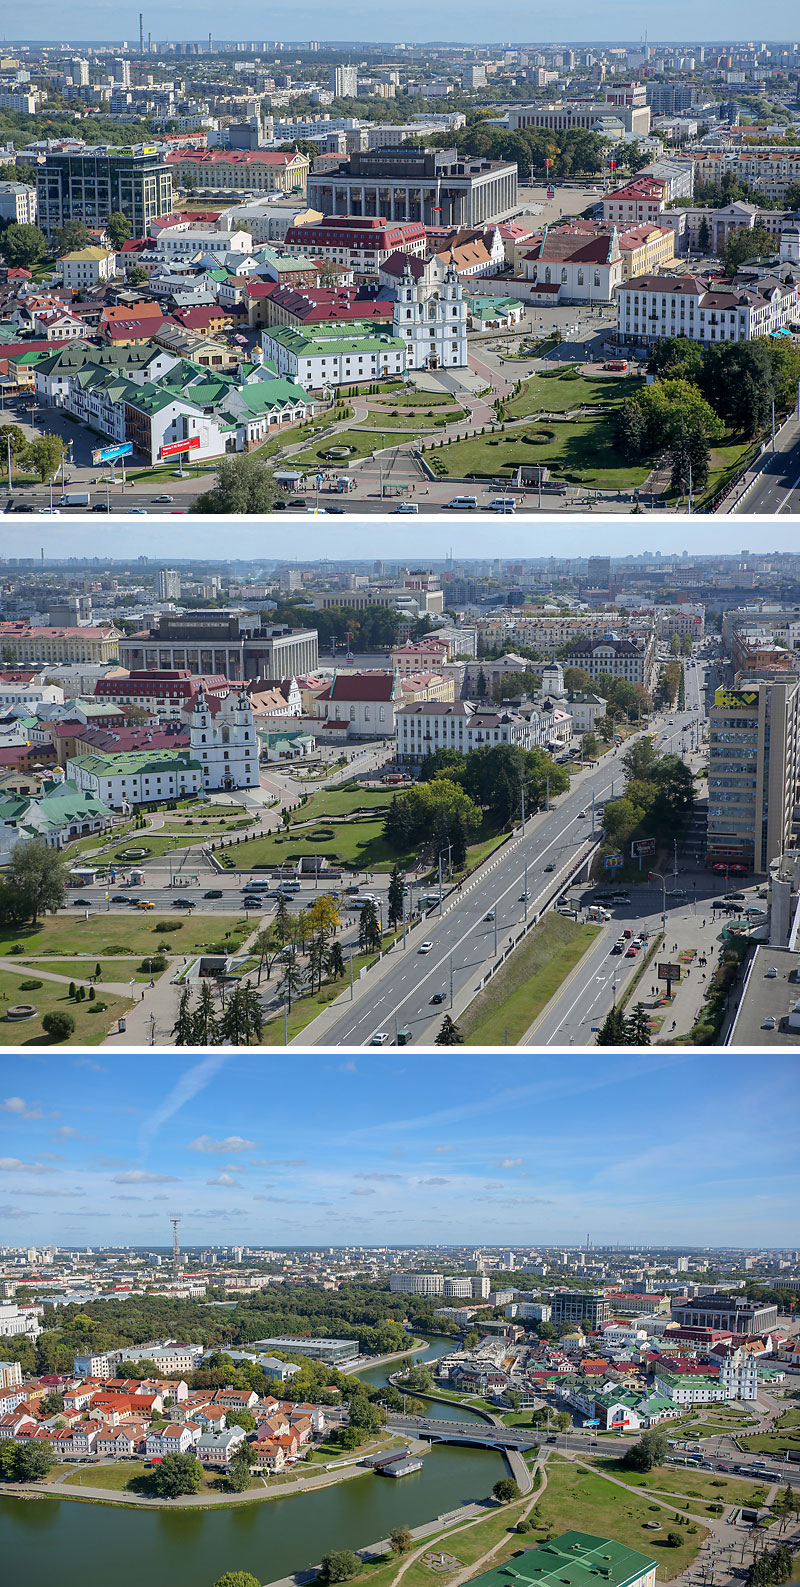 Upper Town, a historic center of Minsk